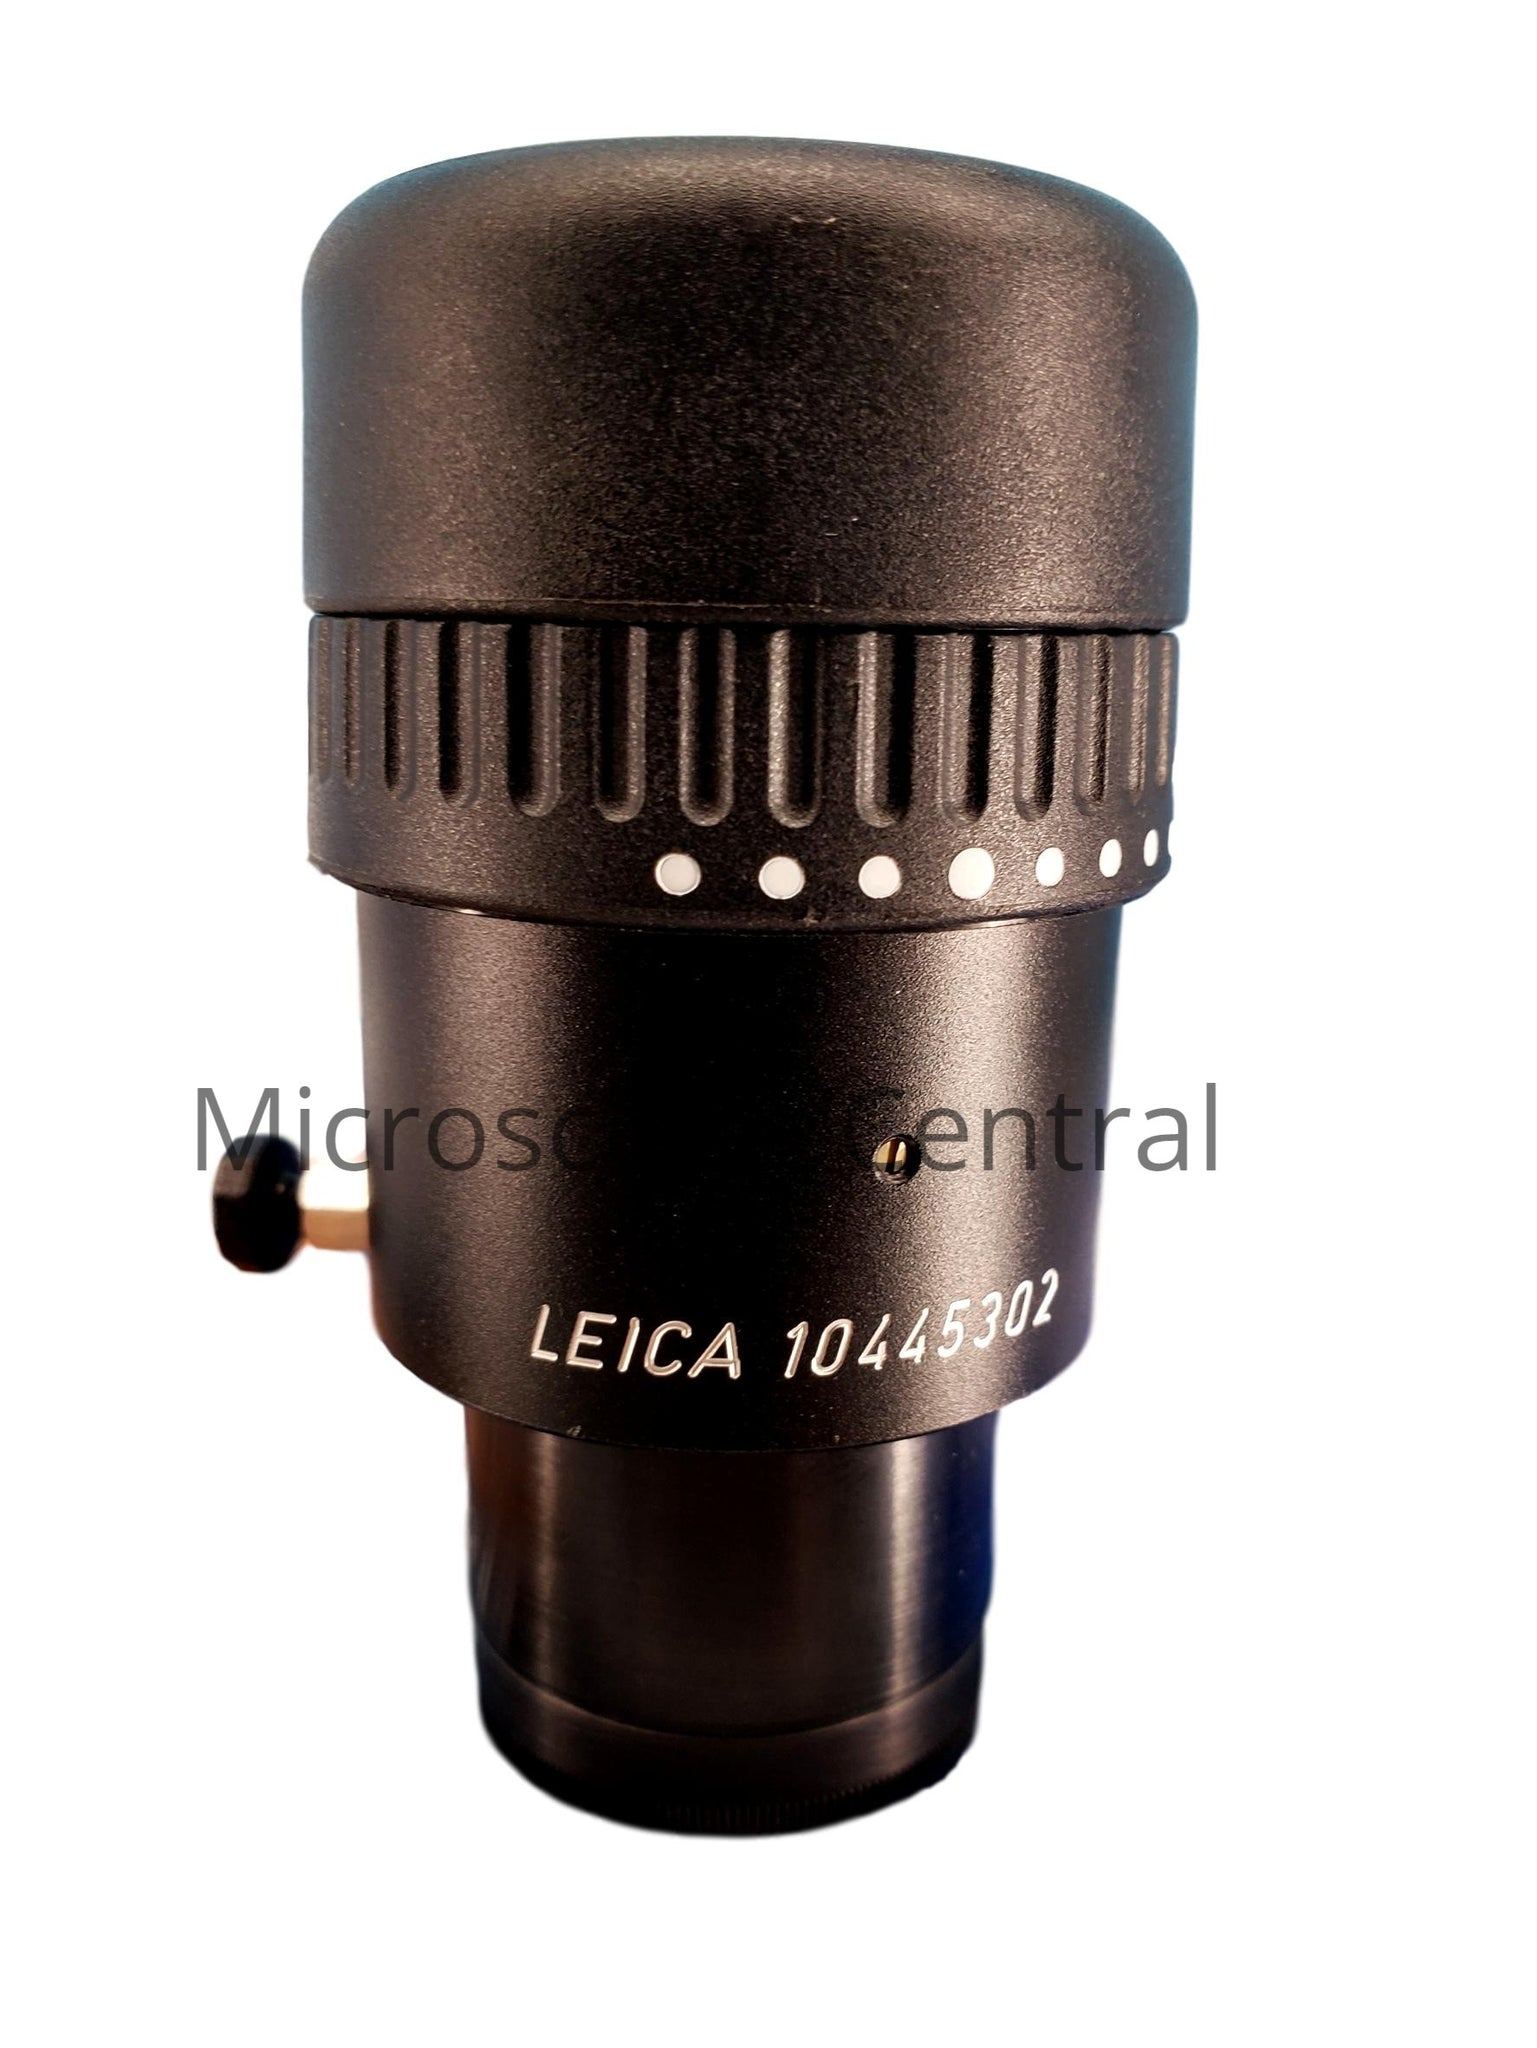 Leica 25x/9.5B Stereo Microscope Eyepieces - 10445302